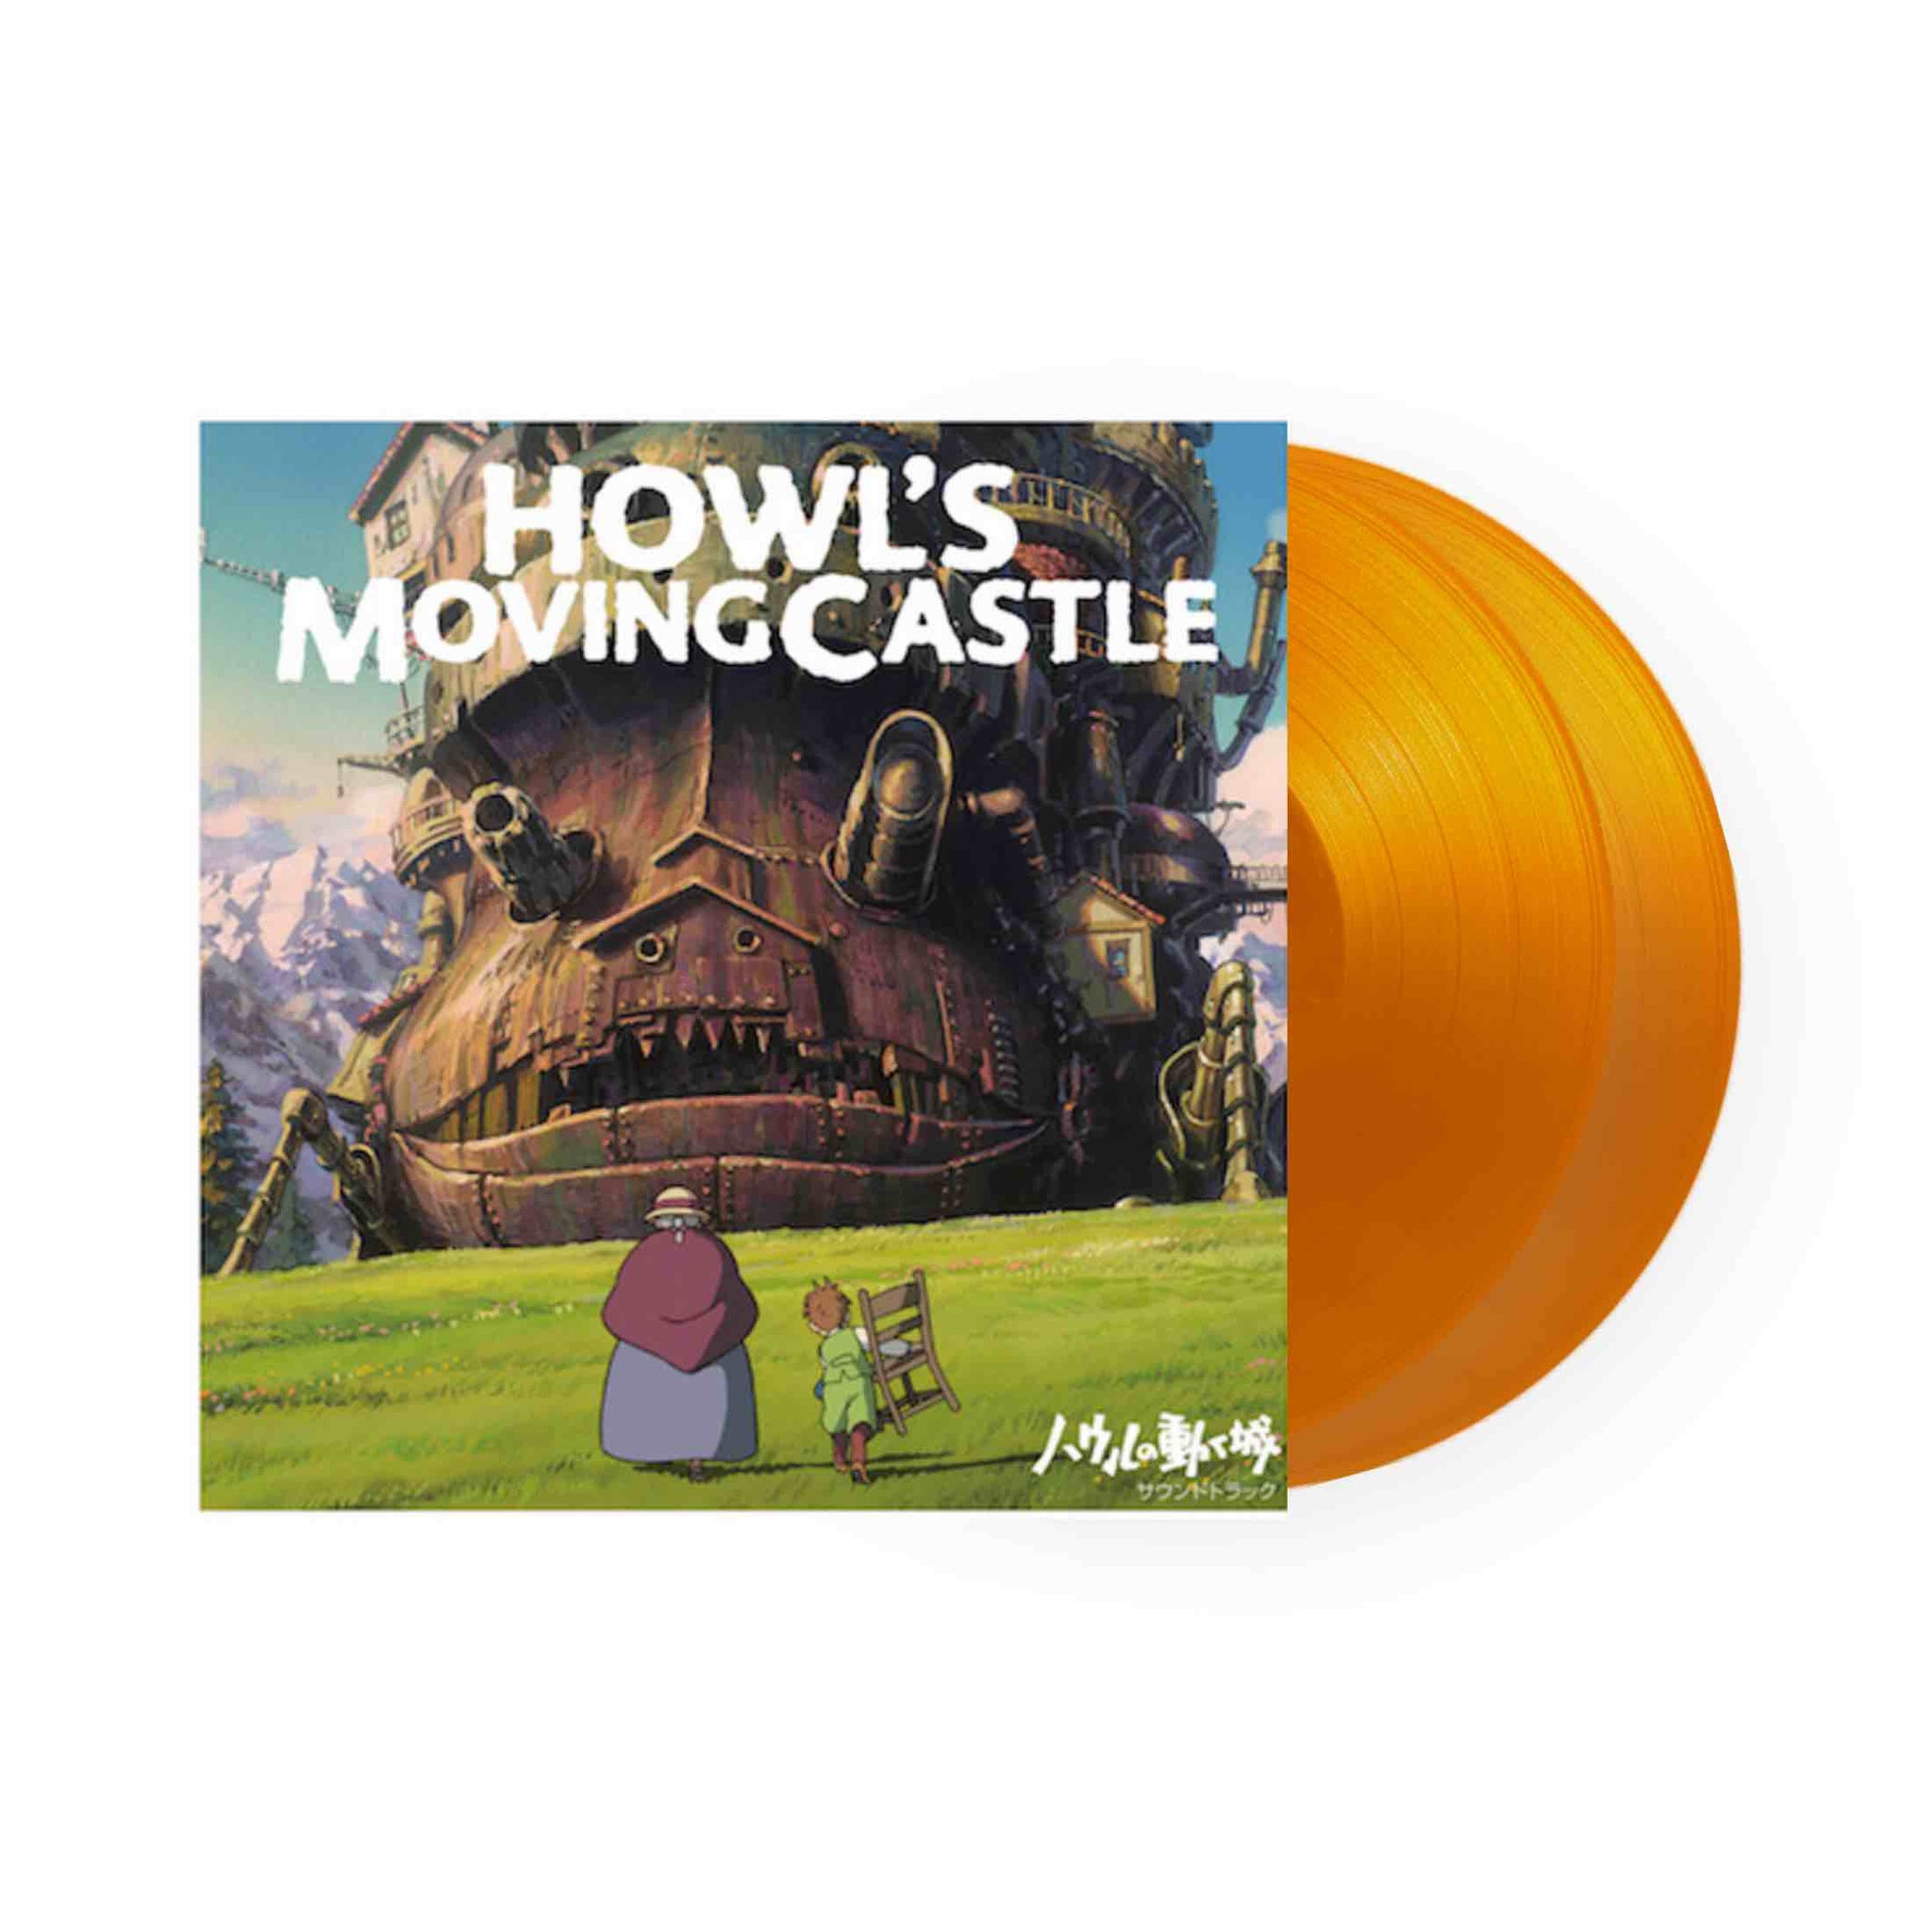 Howls Moving Castle - Original Soundtrack 2xLP (Orange Vinyl)